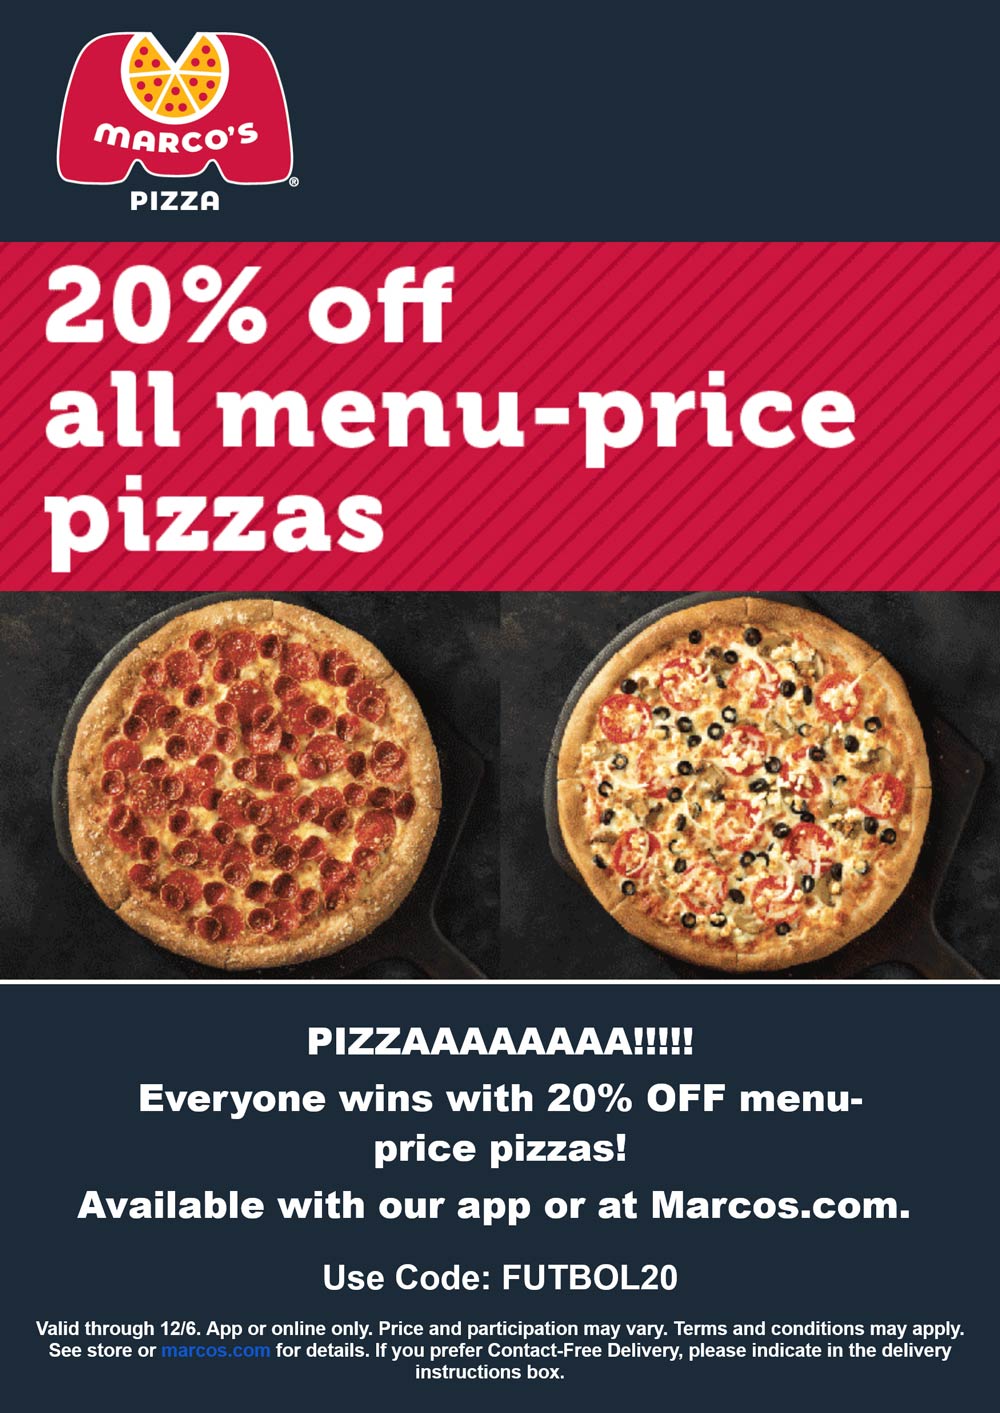 Marcos restaurants Coupon  20% off today at Marcos Pizza via promo code FUTBOL20 #marcos 